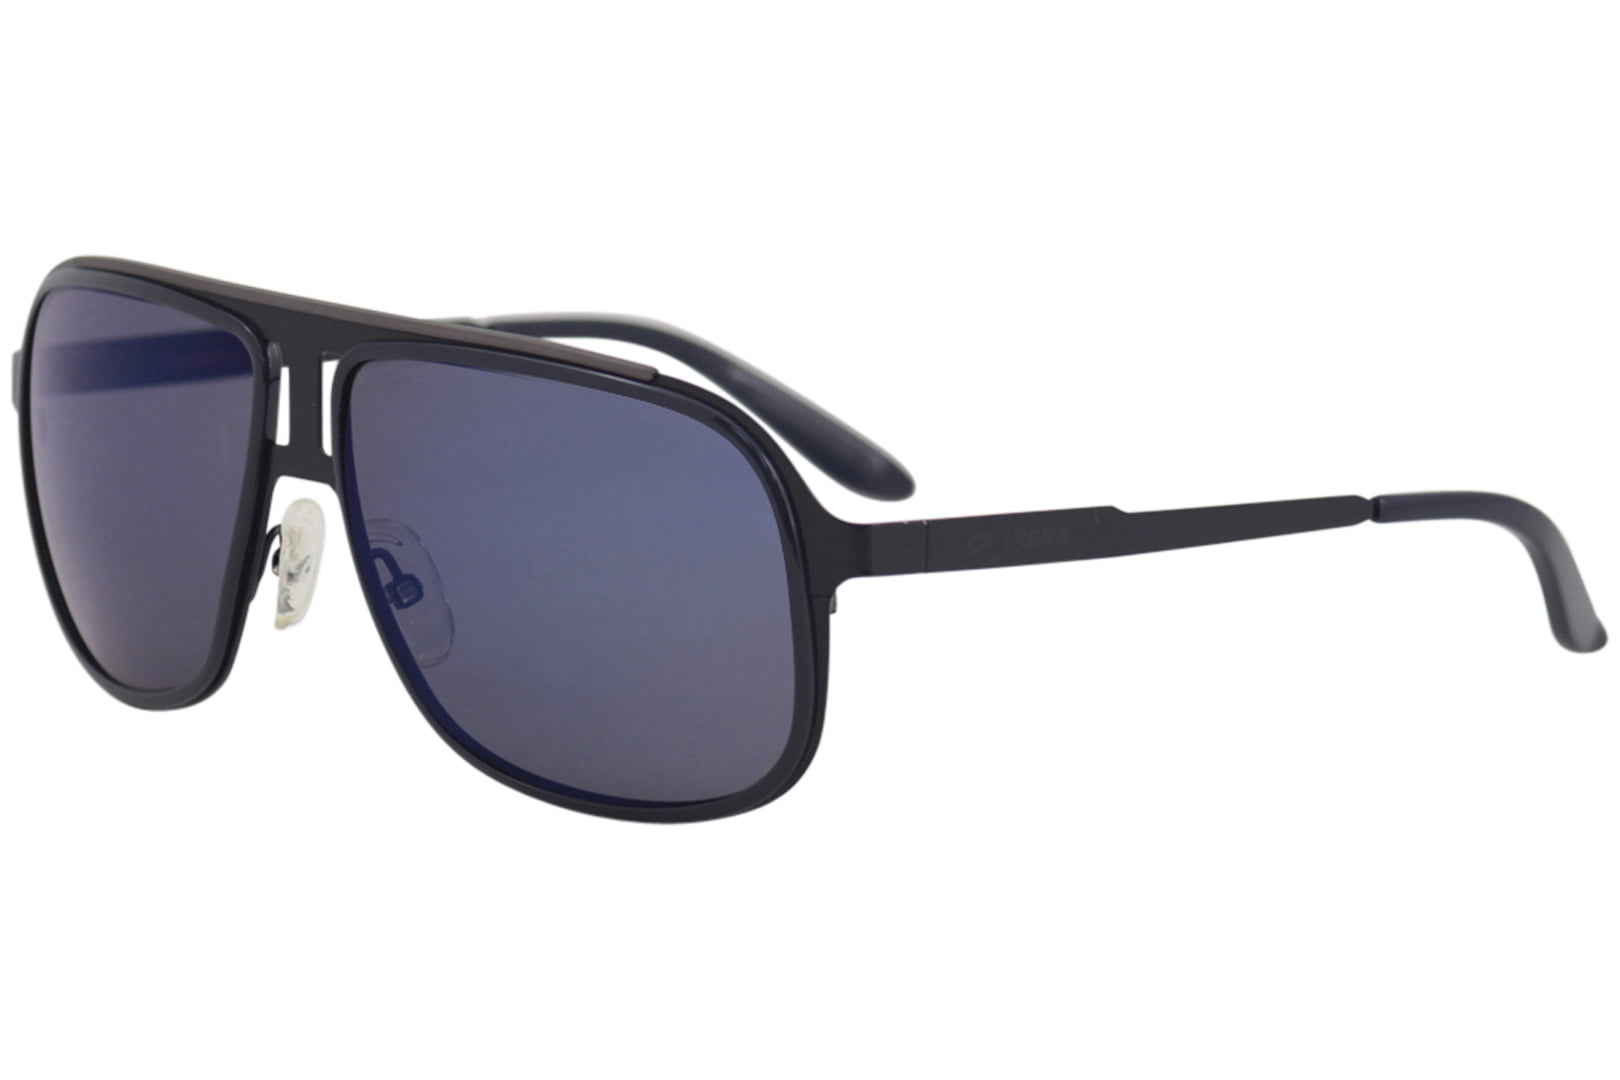 New Carrera Men's Sunglasses Ruthenium Pilot Gradient Lens Eye Glasses with Box 